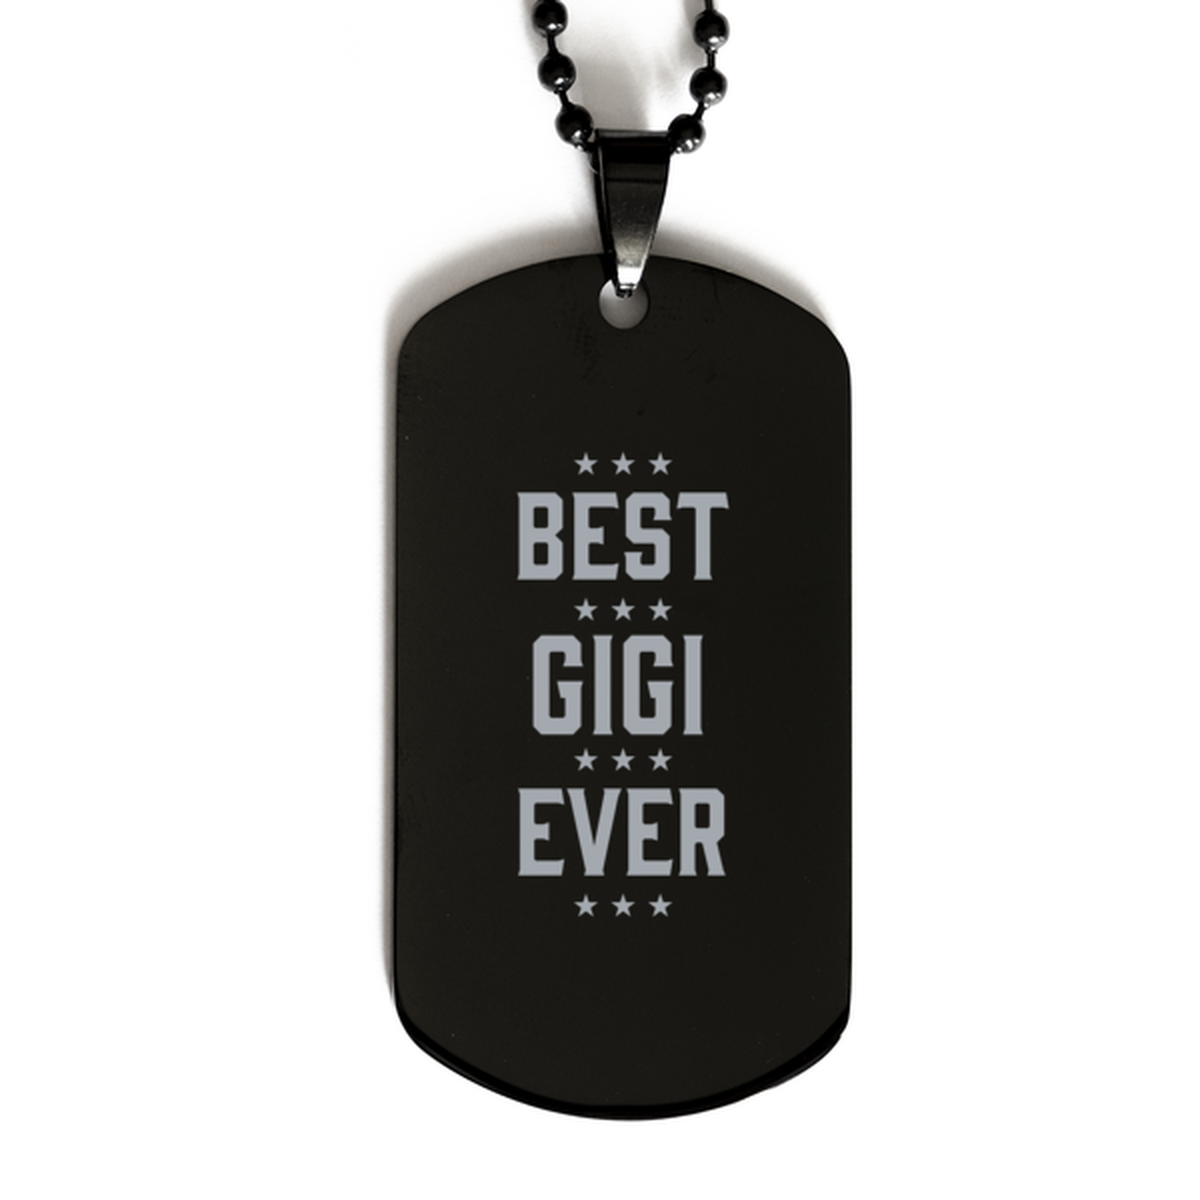 Best Gigi Ever Gigi Gifts, Funny Black Dog Tag For Gigi, Birthday Family Presents Engraved Necklace For Women